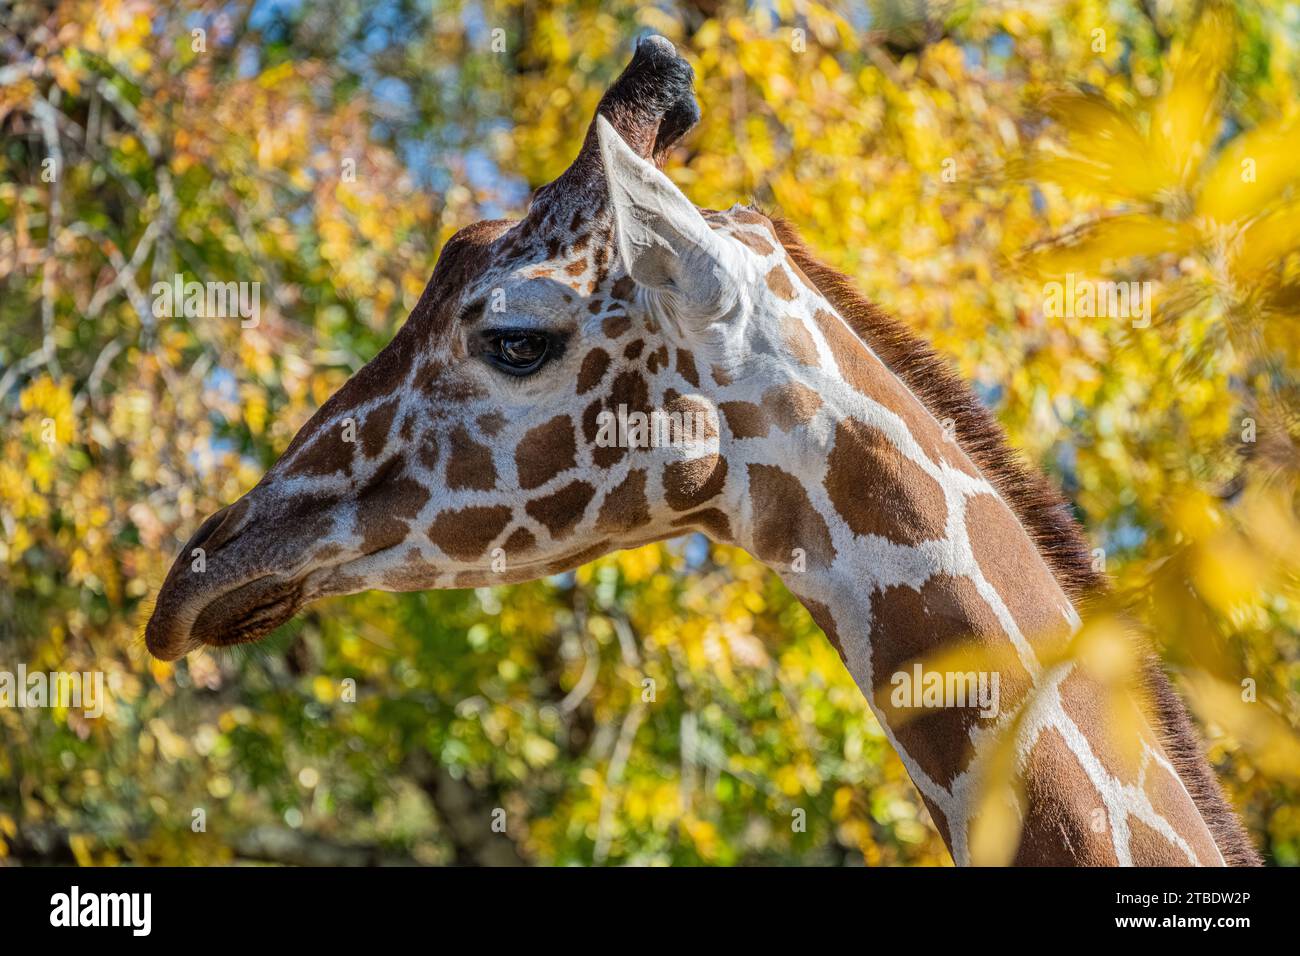 Giirafe réticulée (Giraffa camelopardalis reticulata) parmi le feuillage automnal au Zoo Atlanta à Atlanta, Géorgie. (ÉTATS-UNIS) Banque D'Images